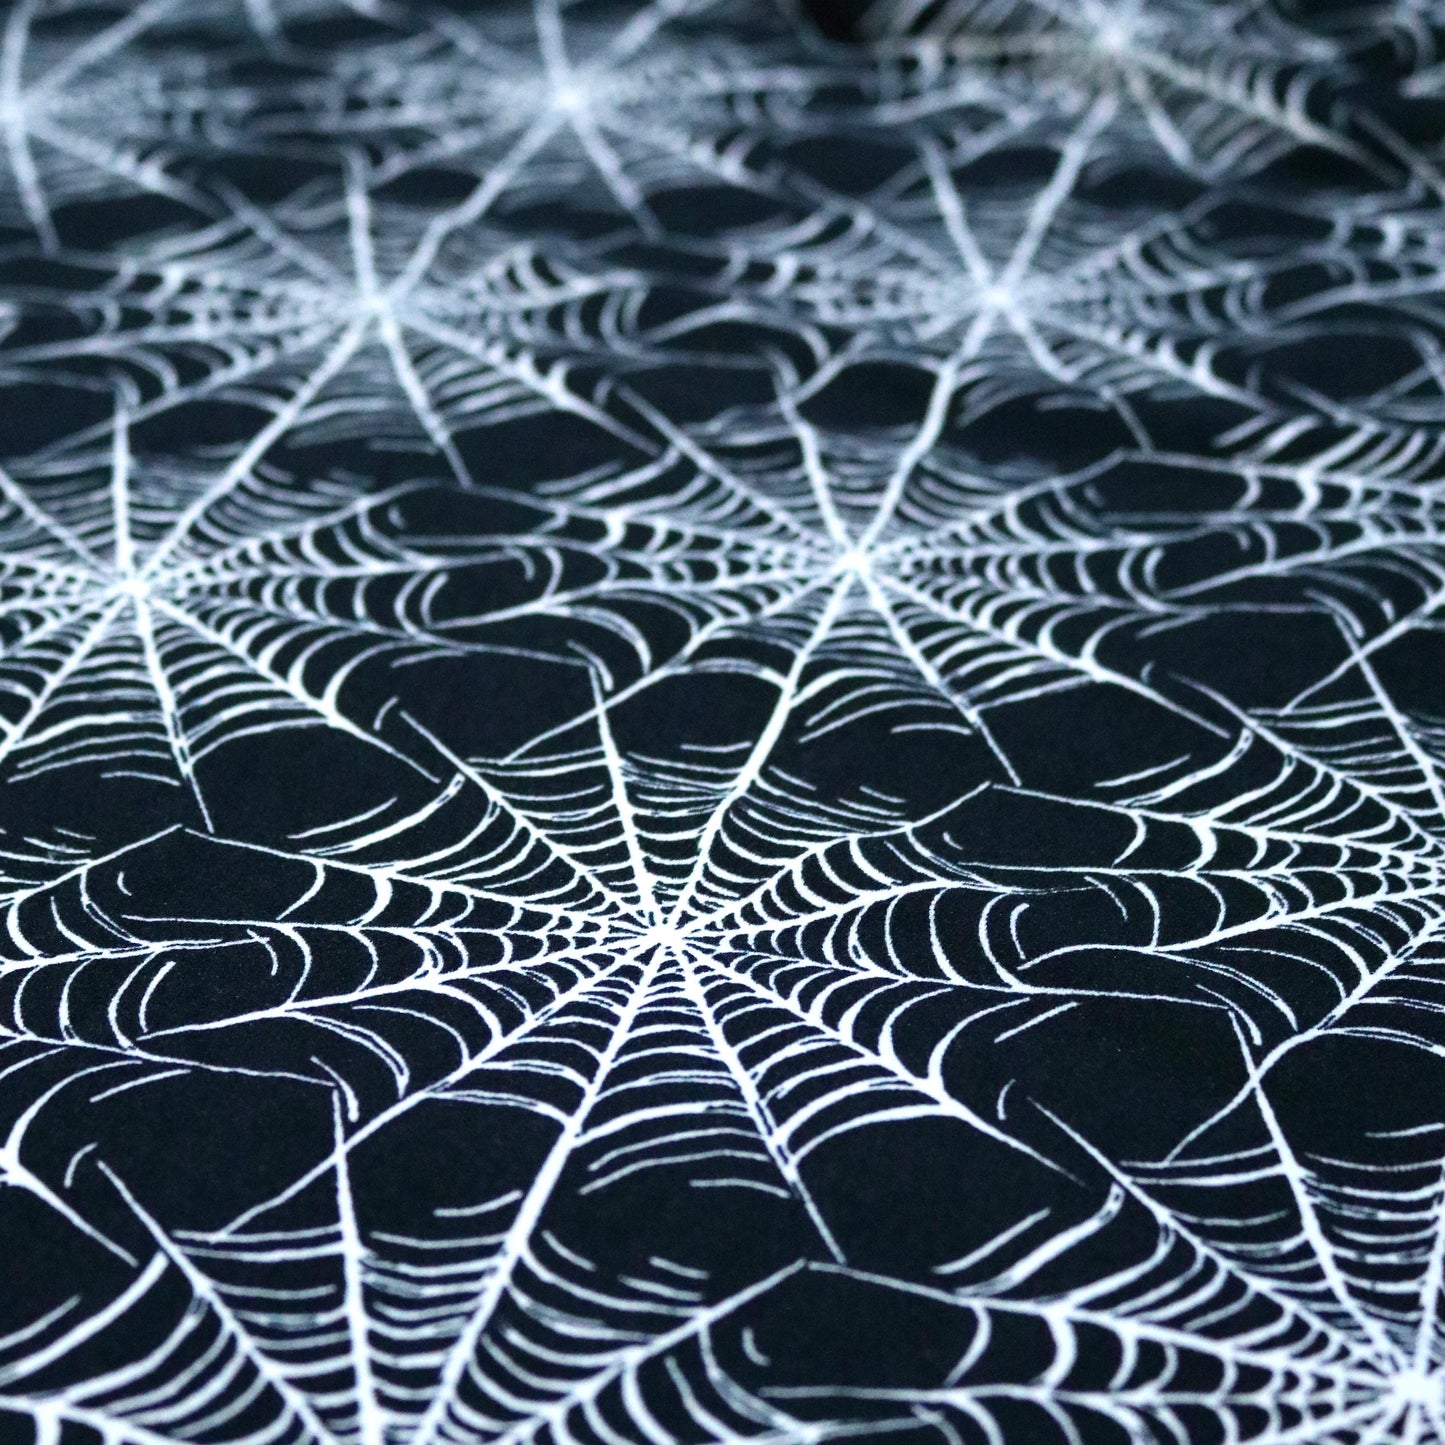 Spider web pattern l/s t-shirt